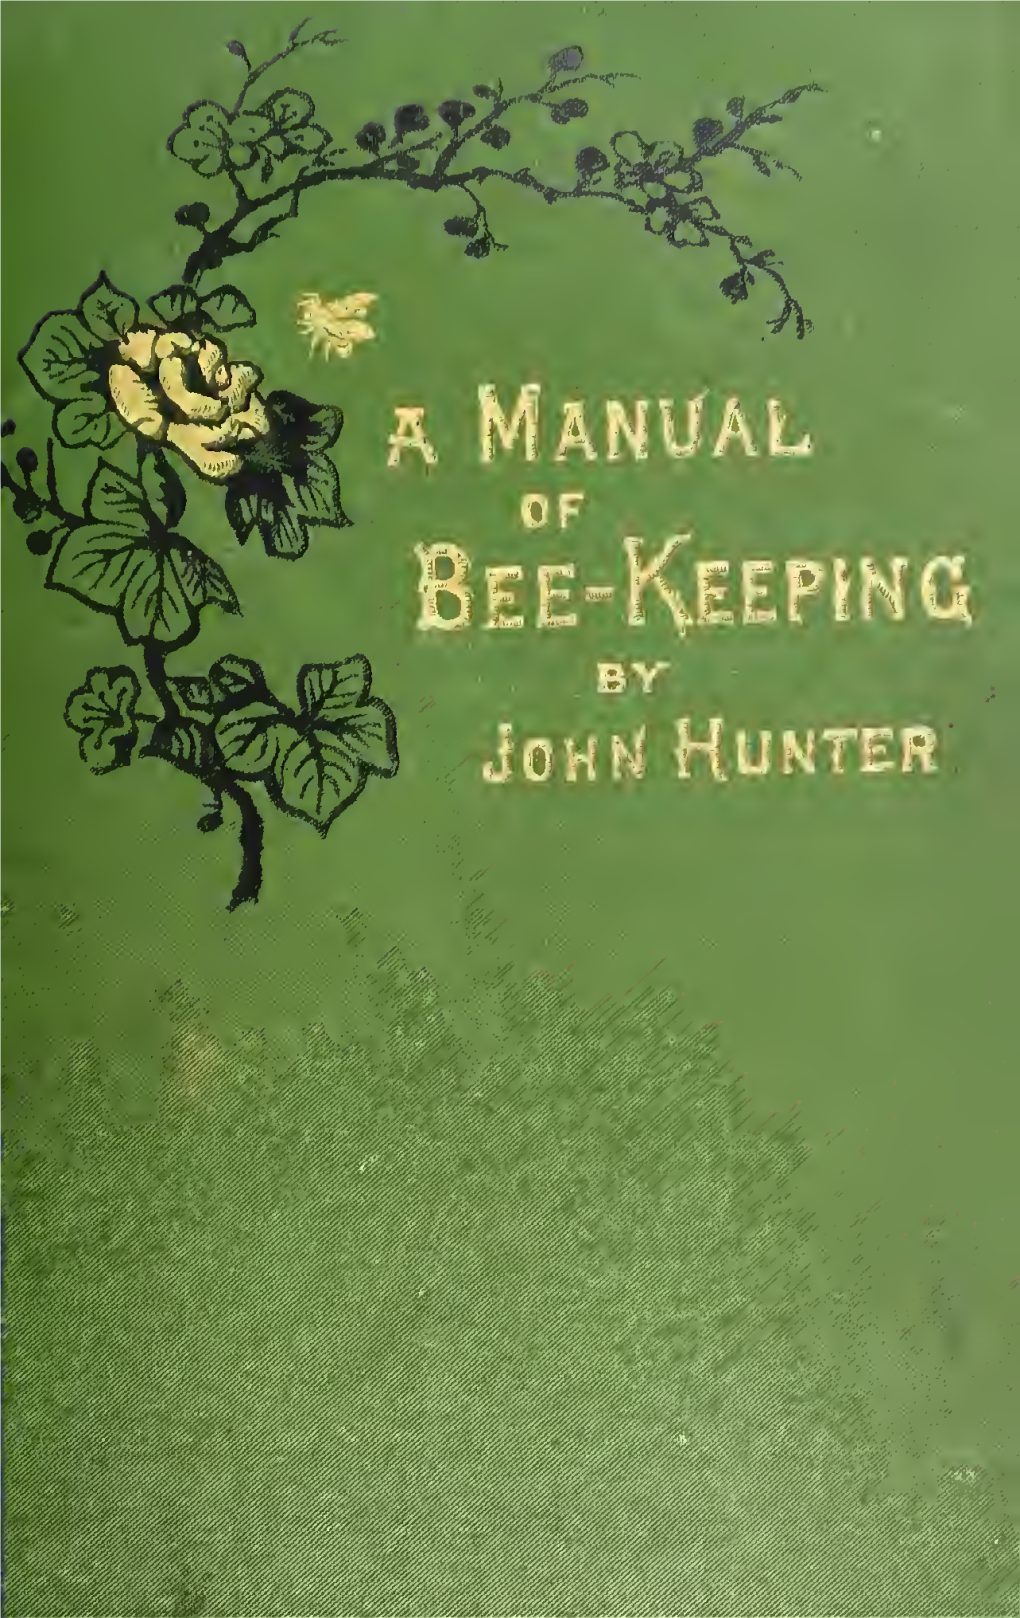 A Manual of Bee-Keeping